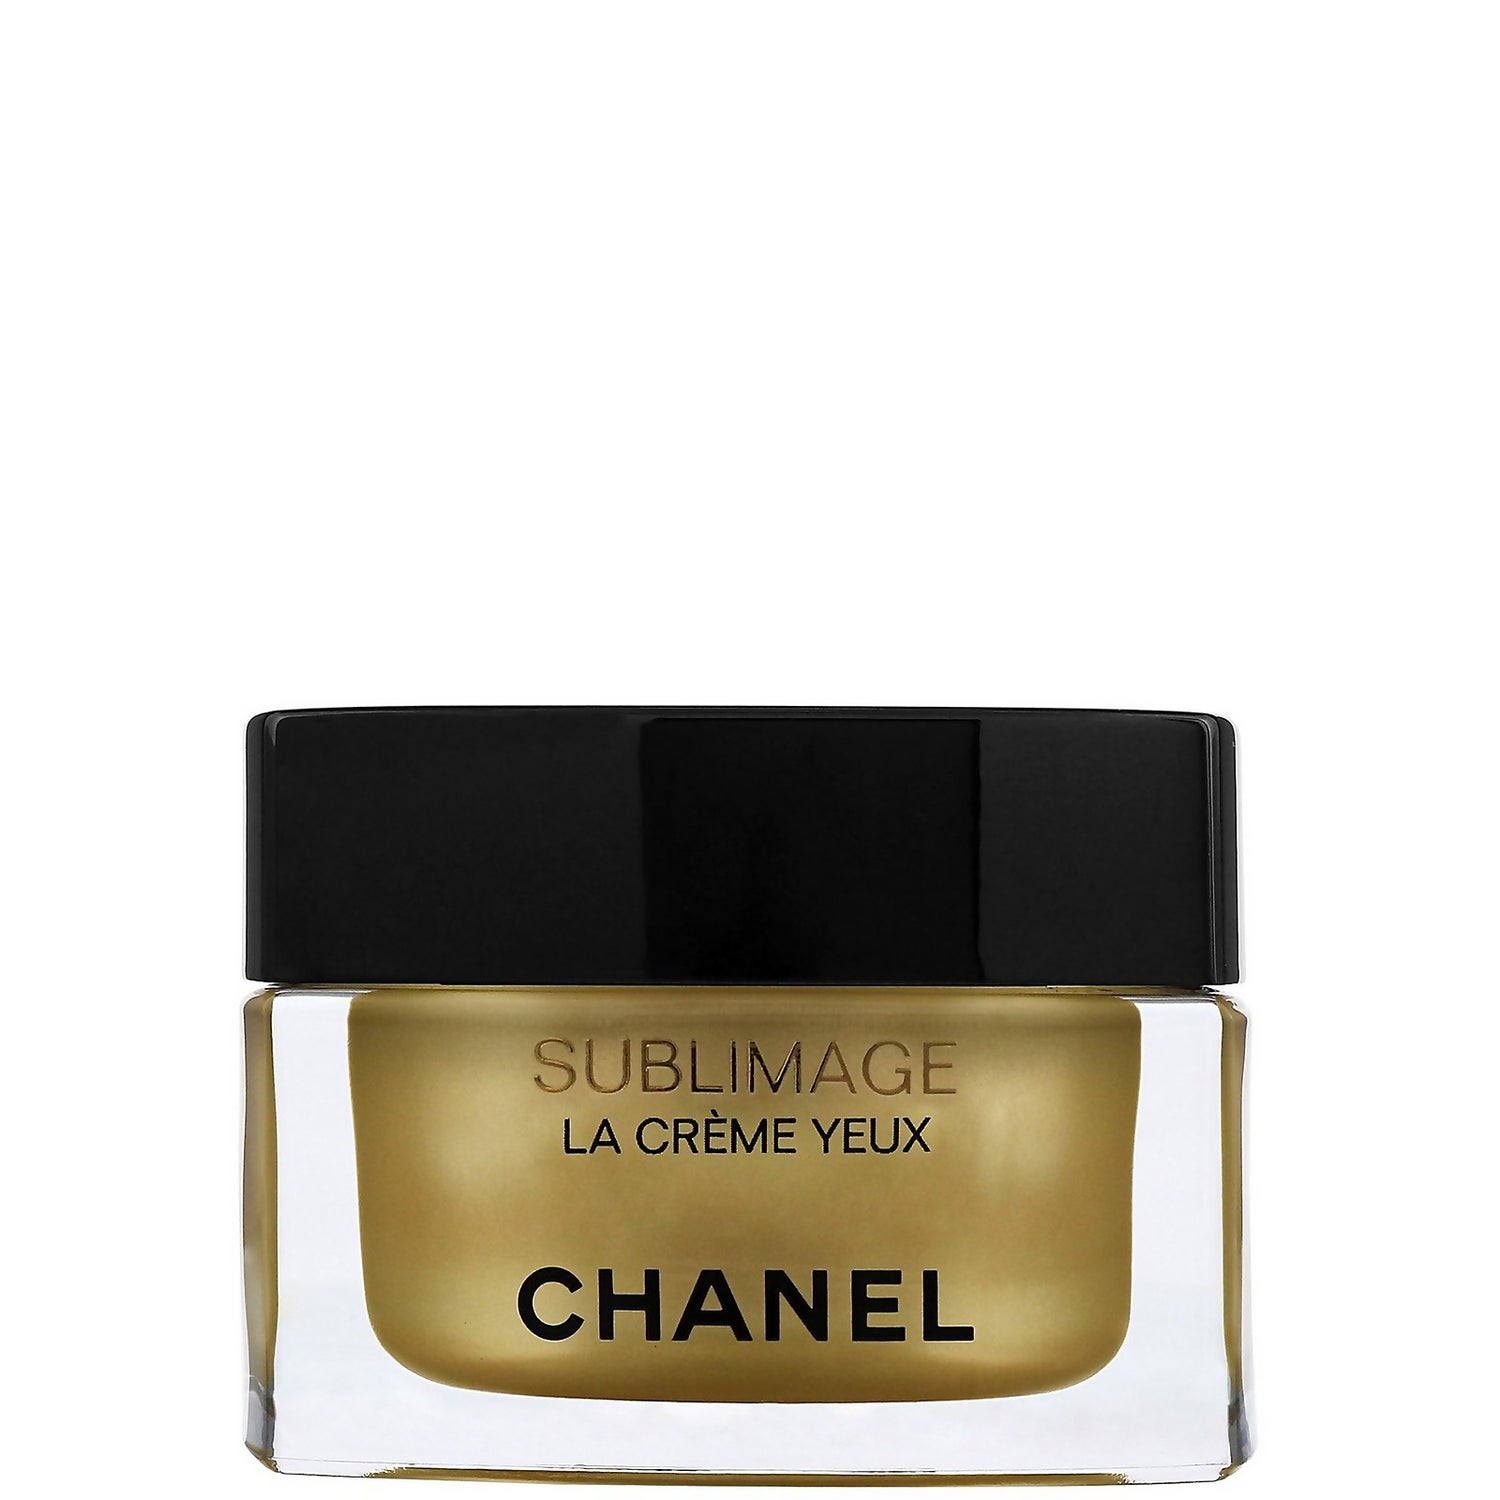 Chanel Eye & Lip Care Sublimage La Creme Yeux Ultimate